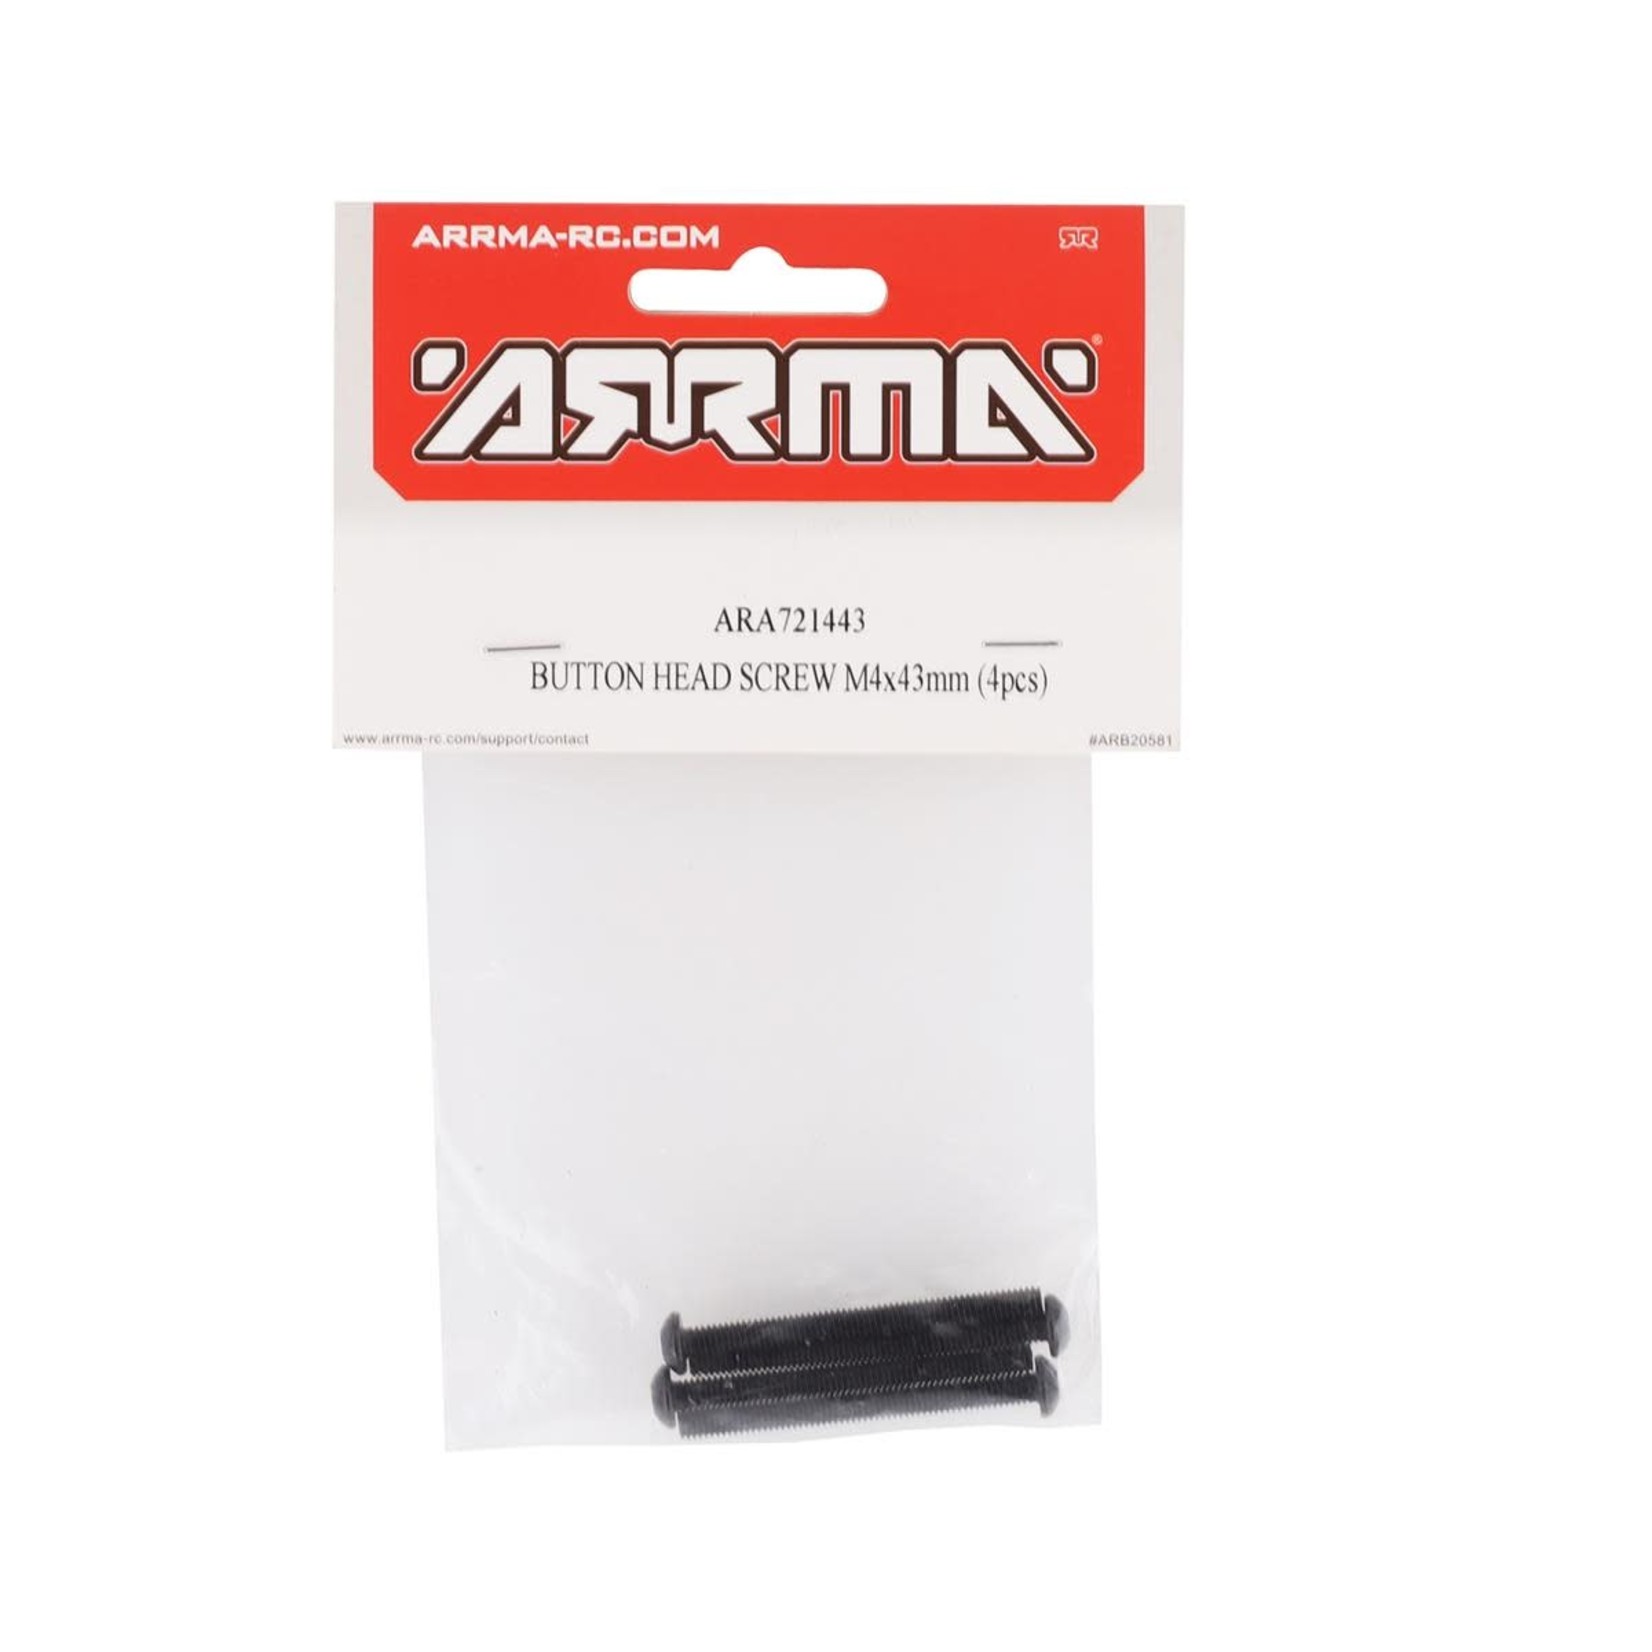 ARRMA Arrma button Head Screw, M4x43mm (4) #ARA721443